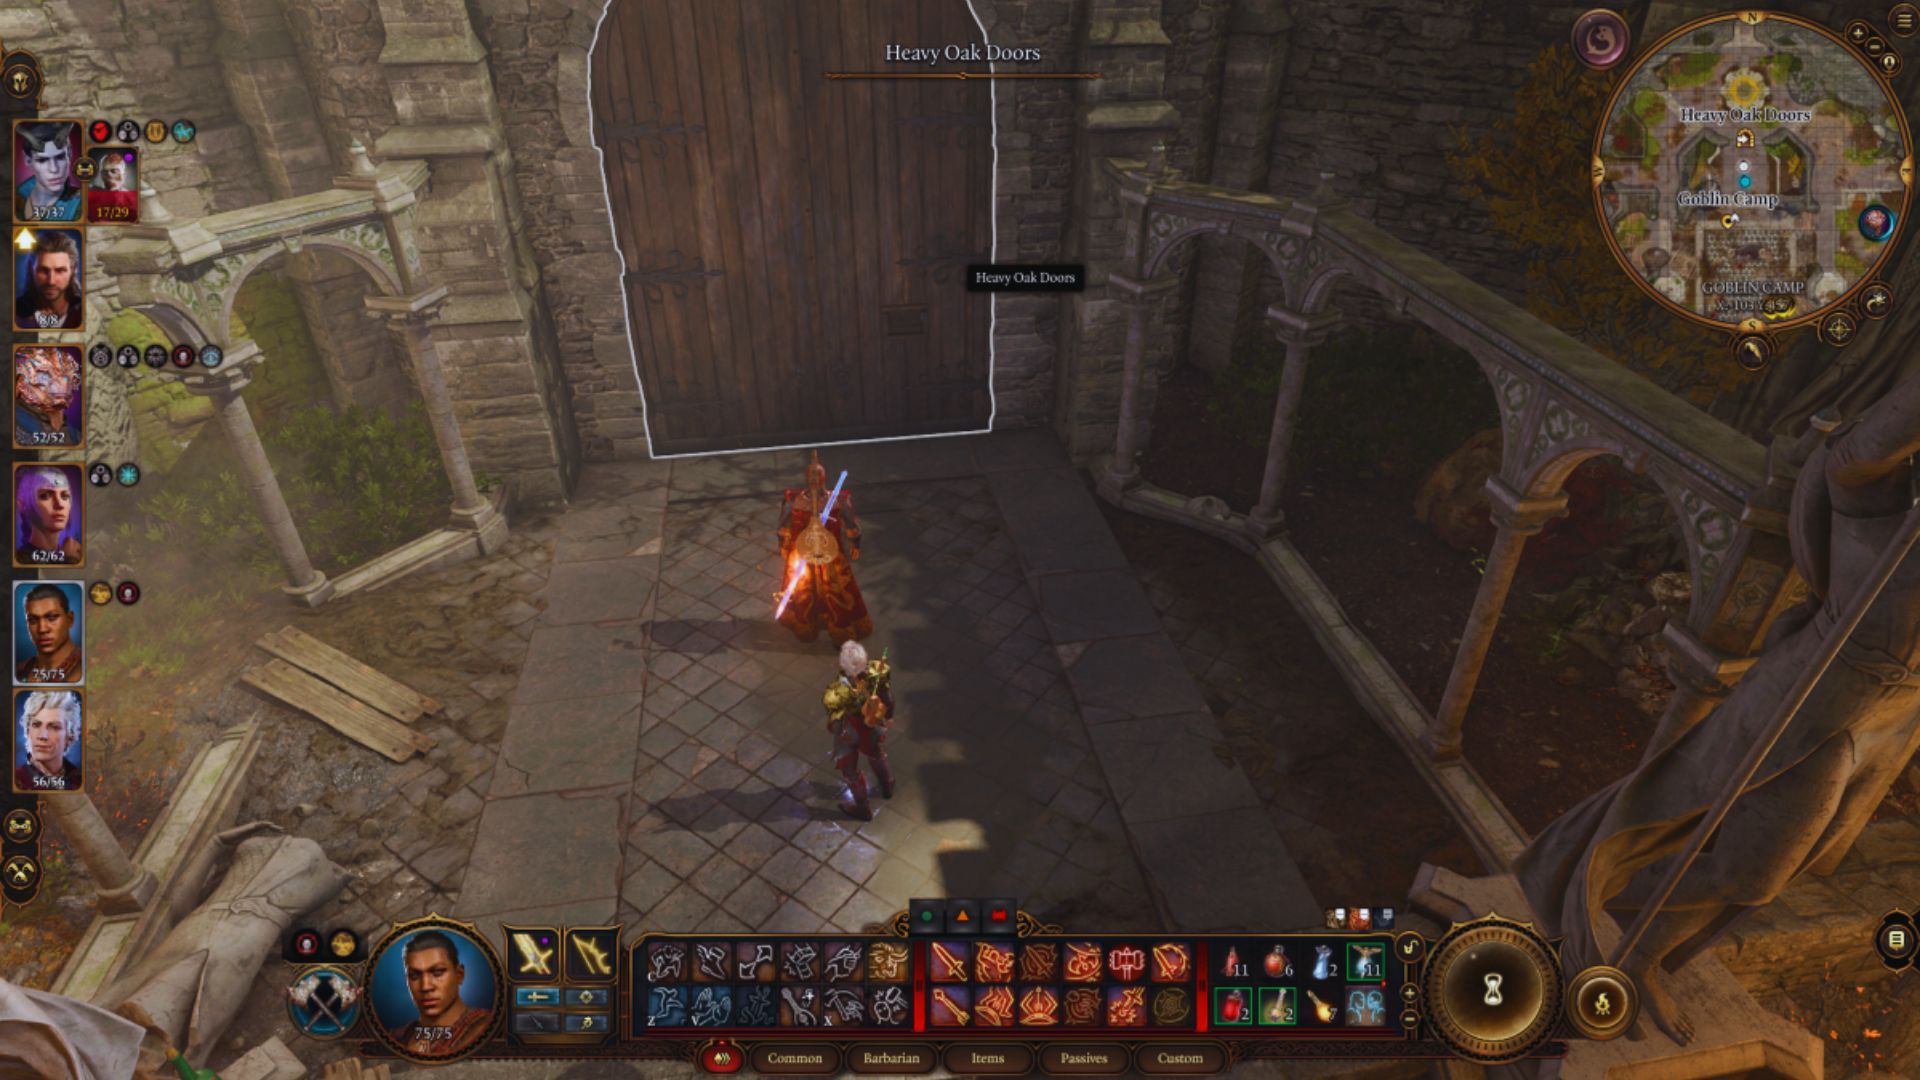 Baldur's Gate 3 - Entrance to the Shattered Sanctum